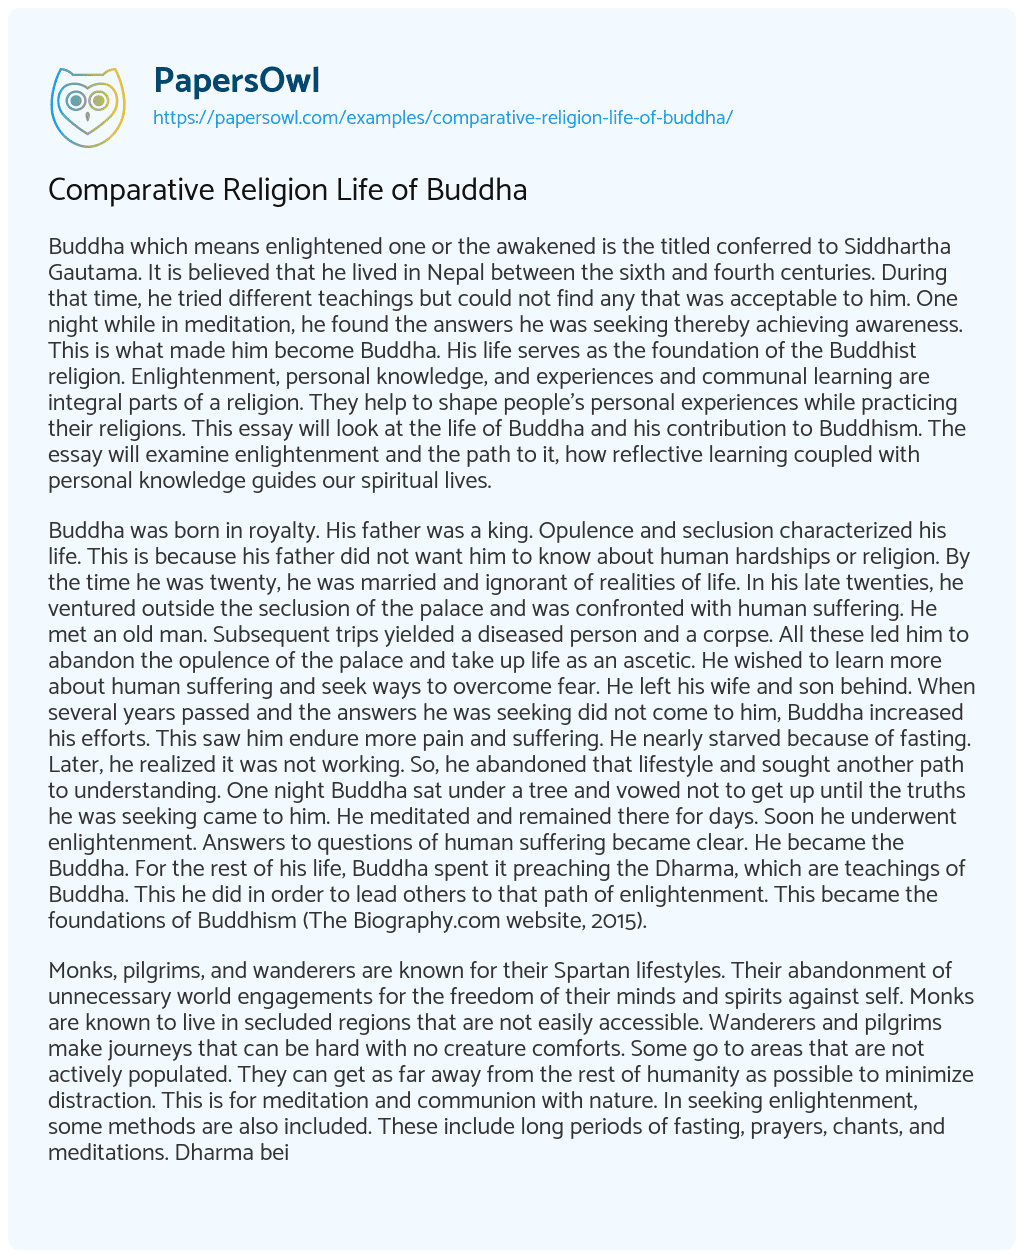 Essay on Comparative Religion Life of Buddha